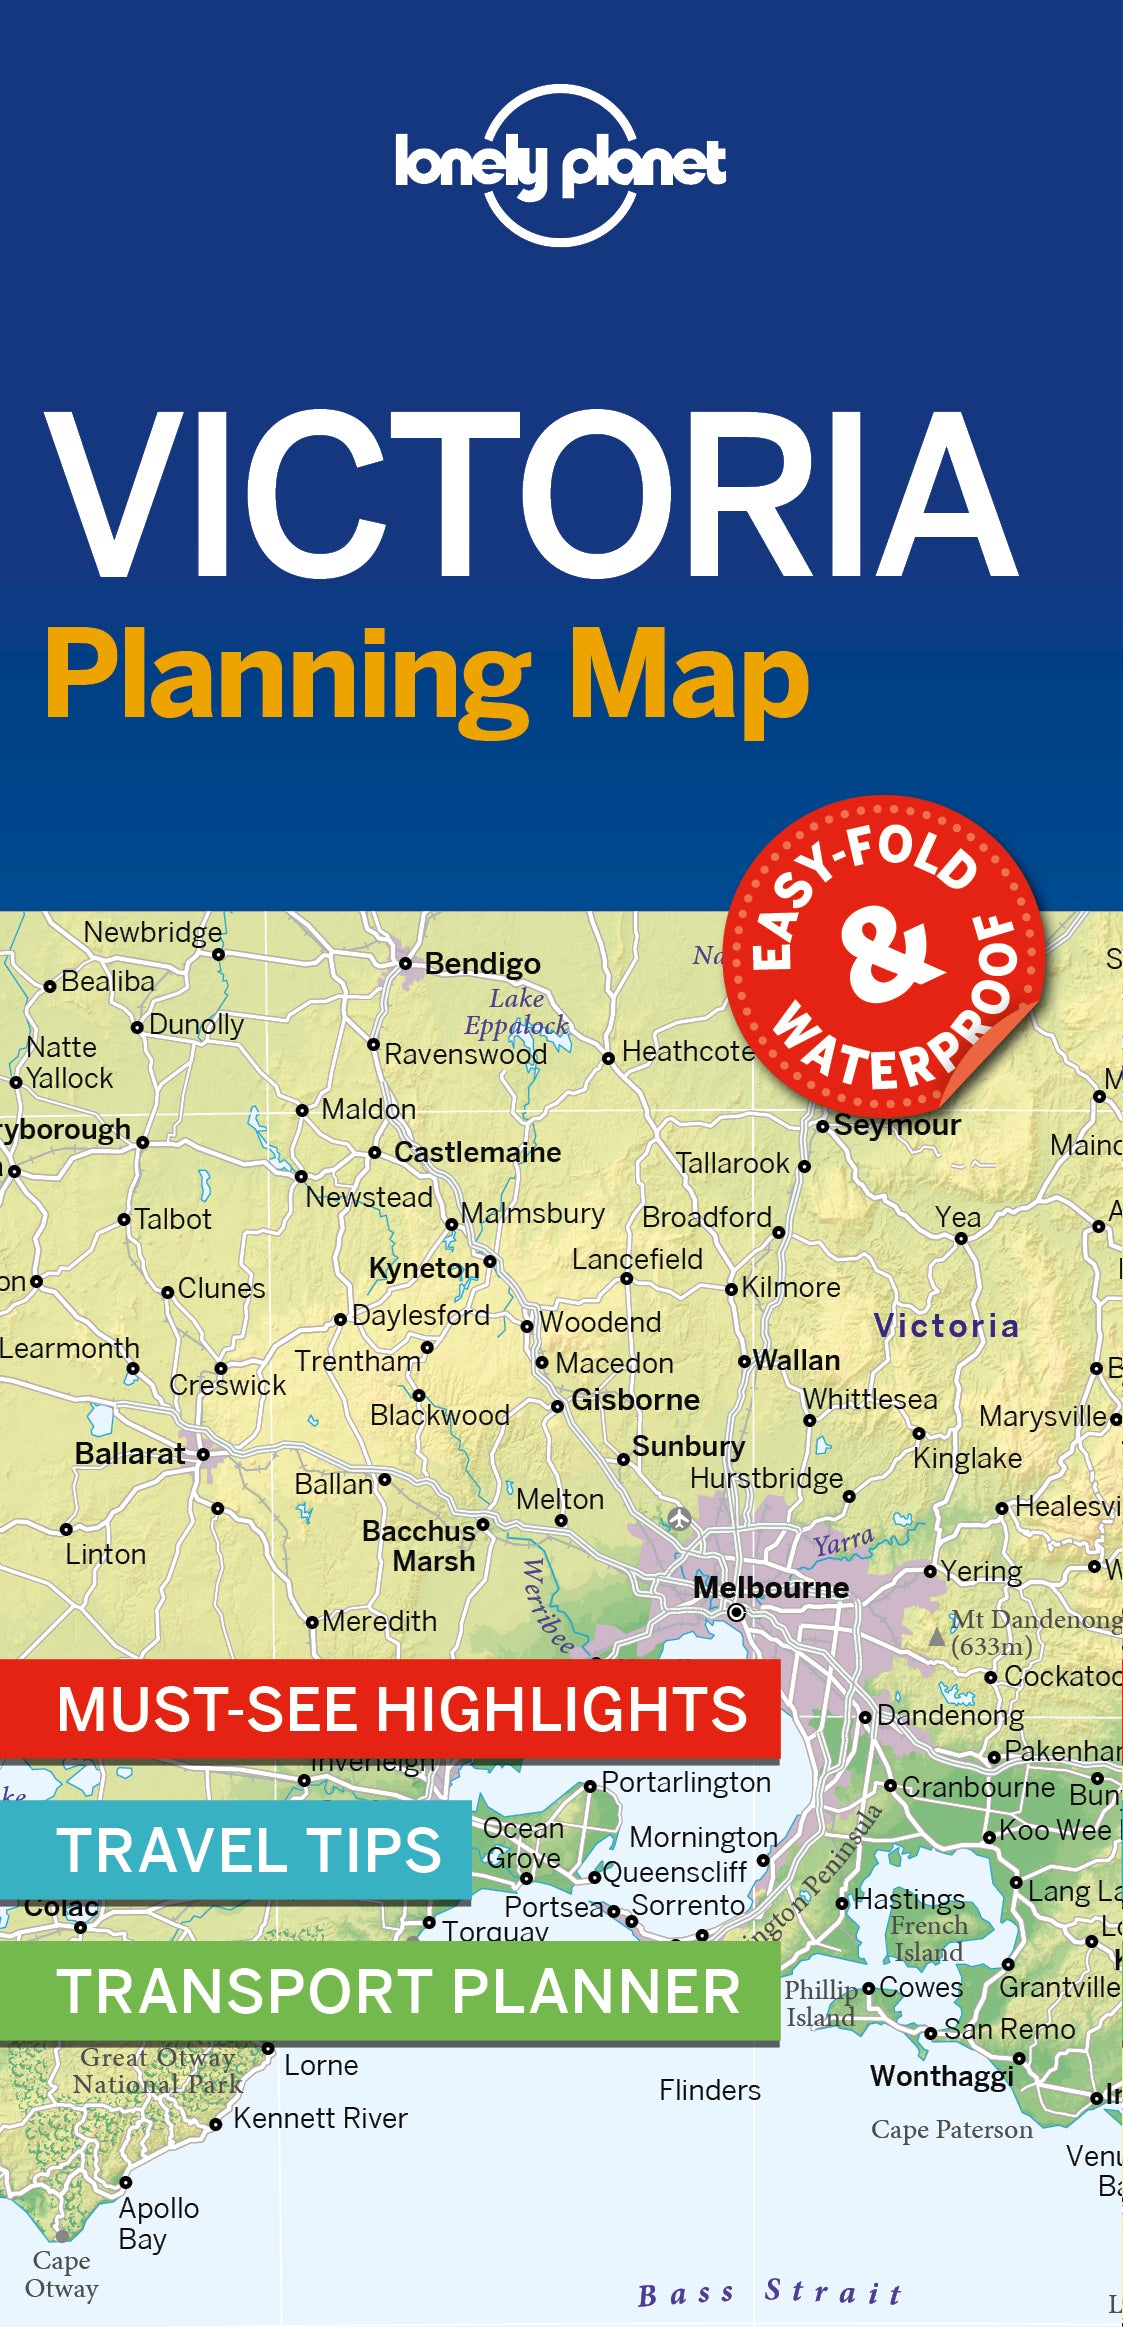 Victoria Planning Map